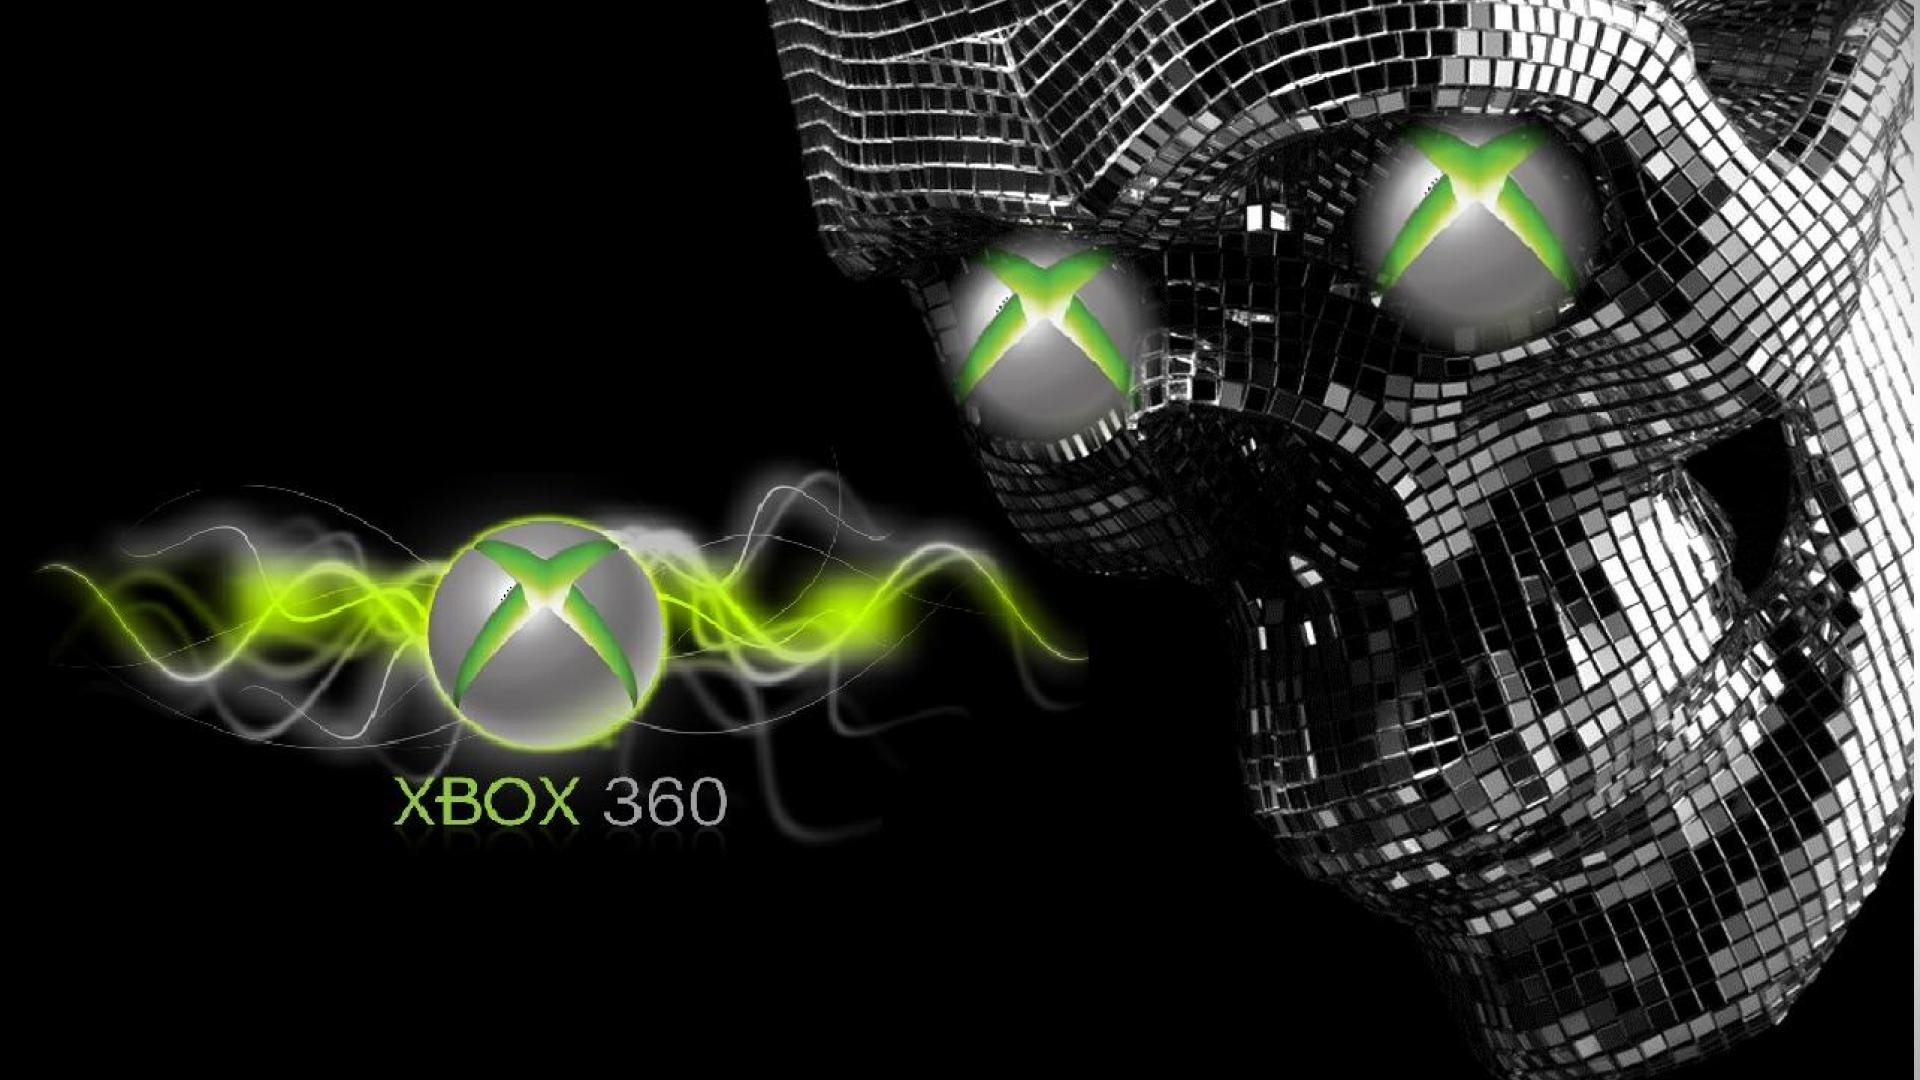 1920x1080 Free Xbox Wallpapers - WallpaperSafari Top Xbox 360 ...